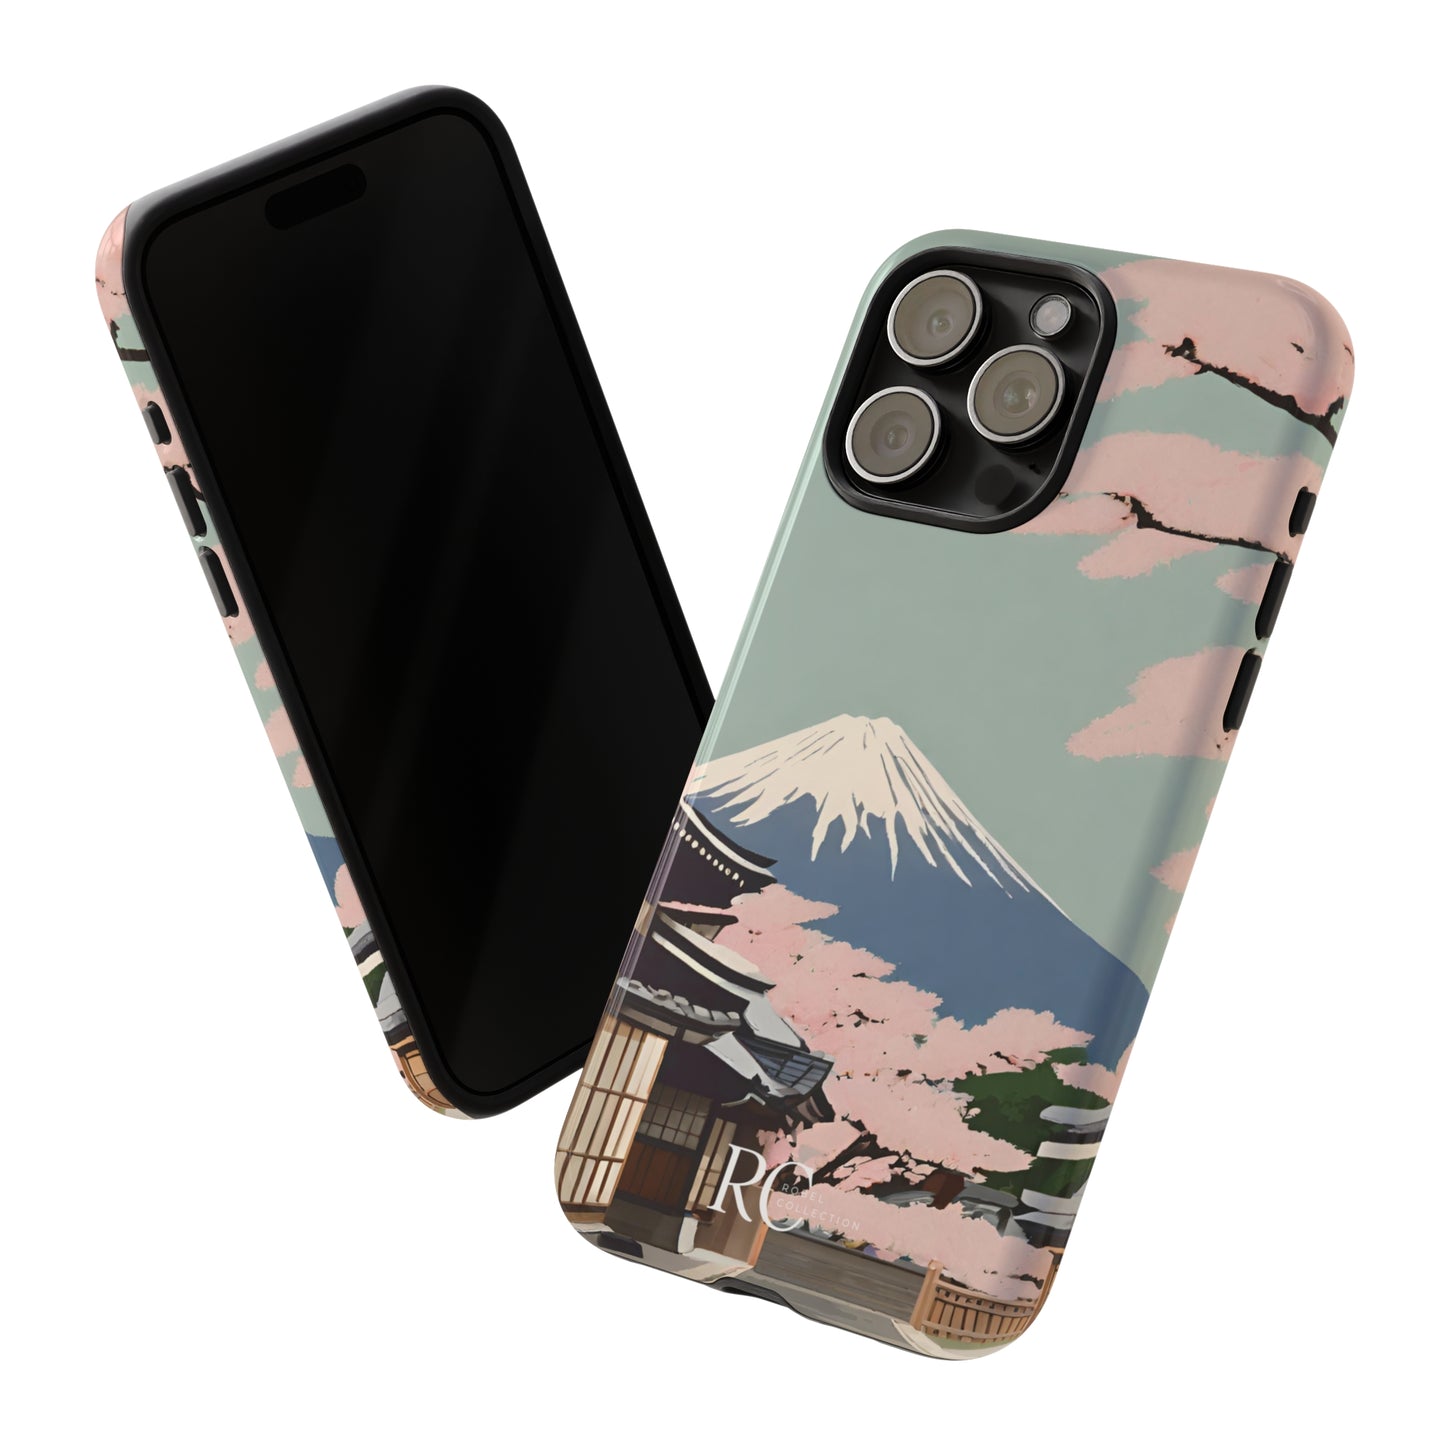 Japan-inspired Green Minimalist Tough iPhone Case